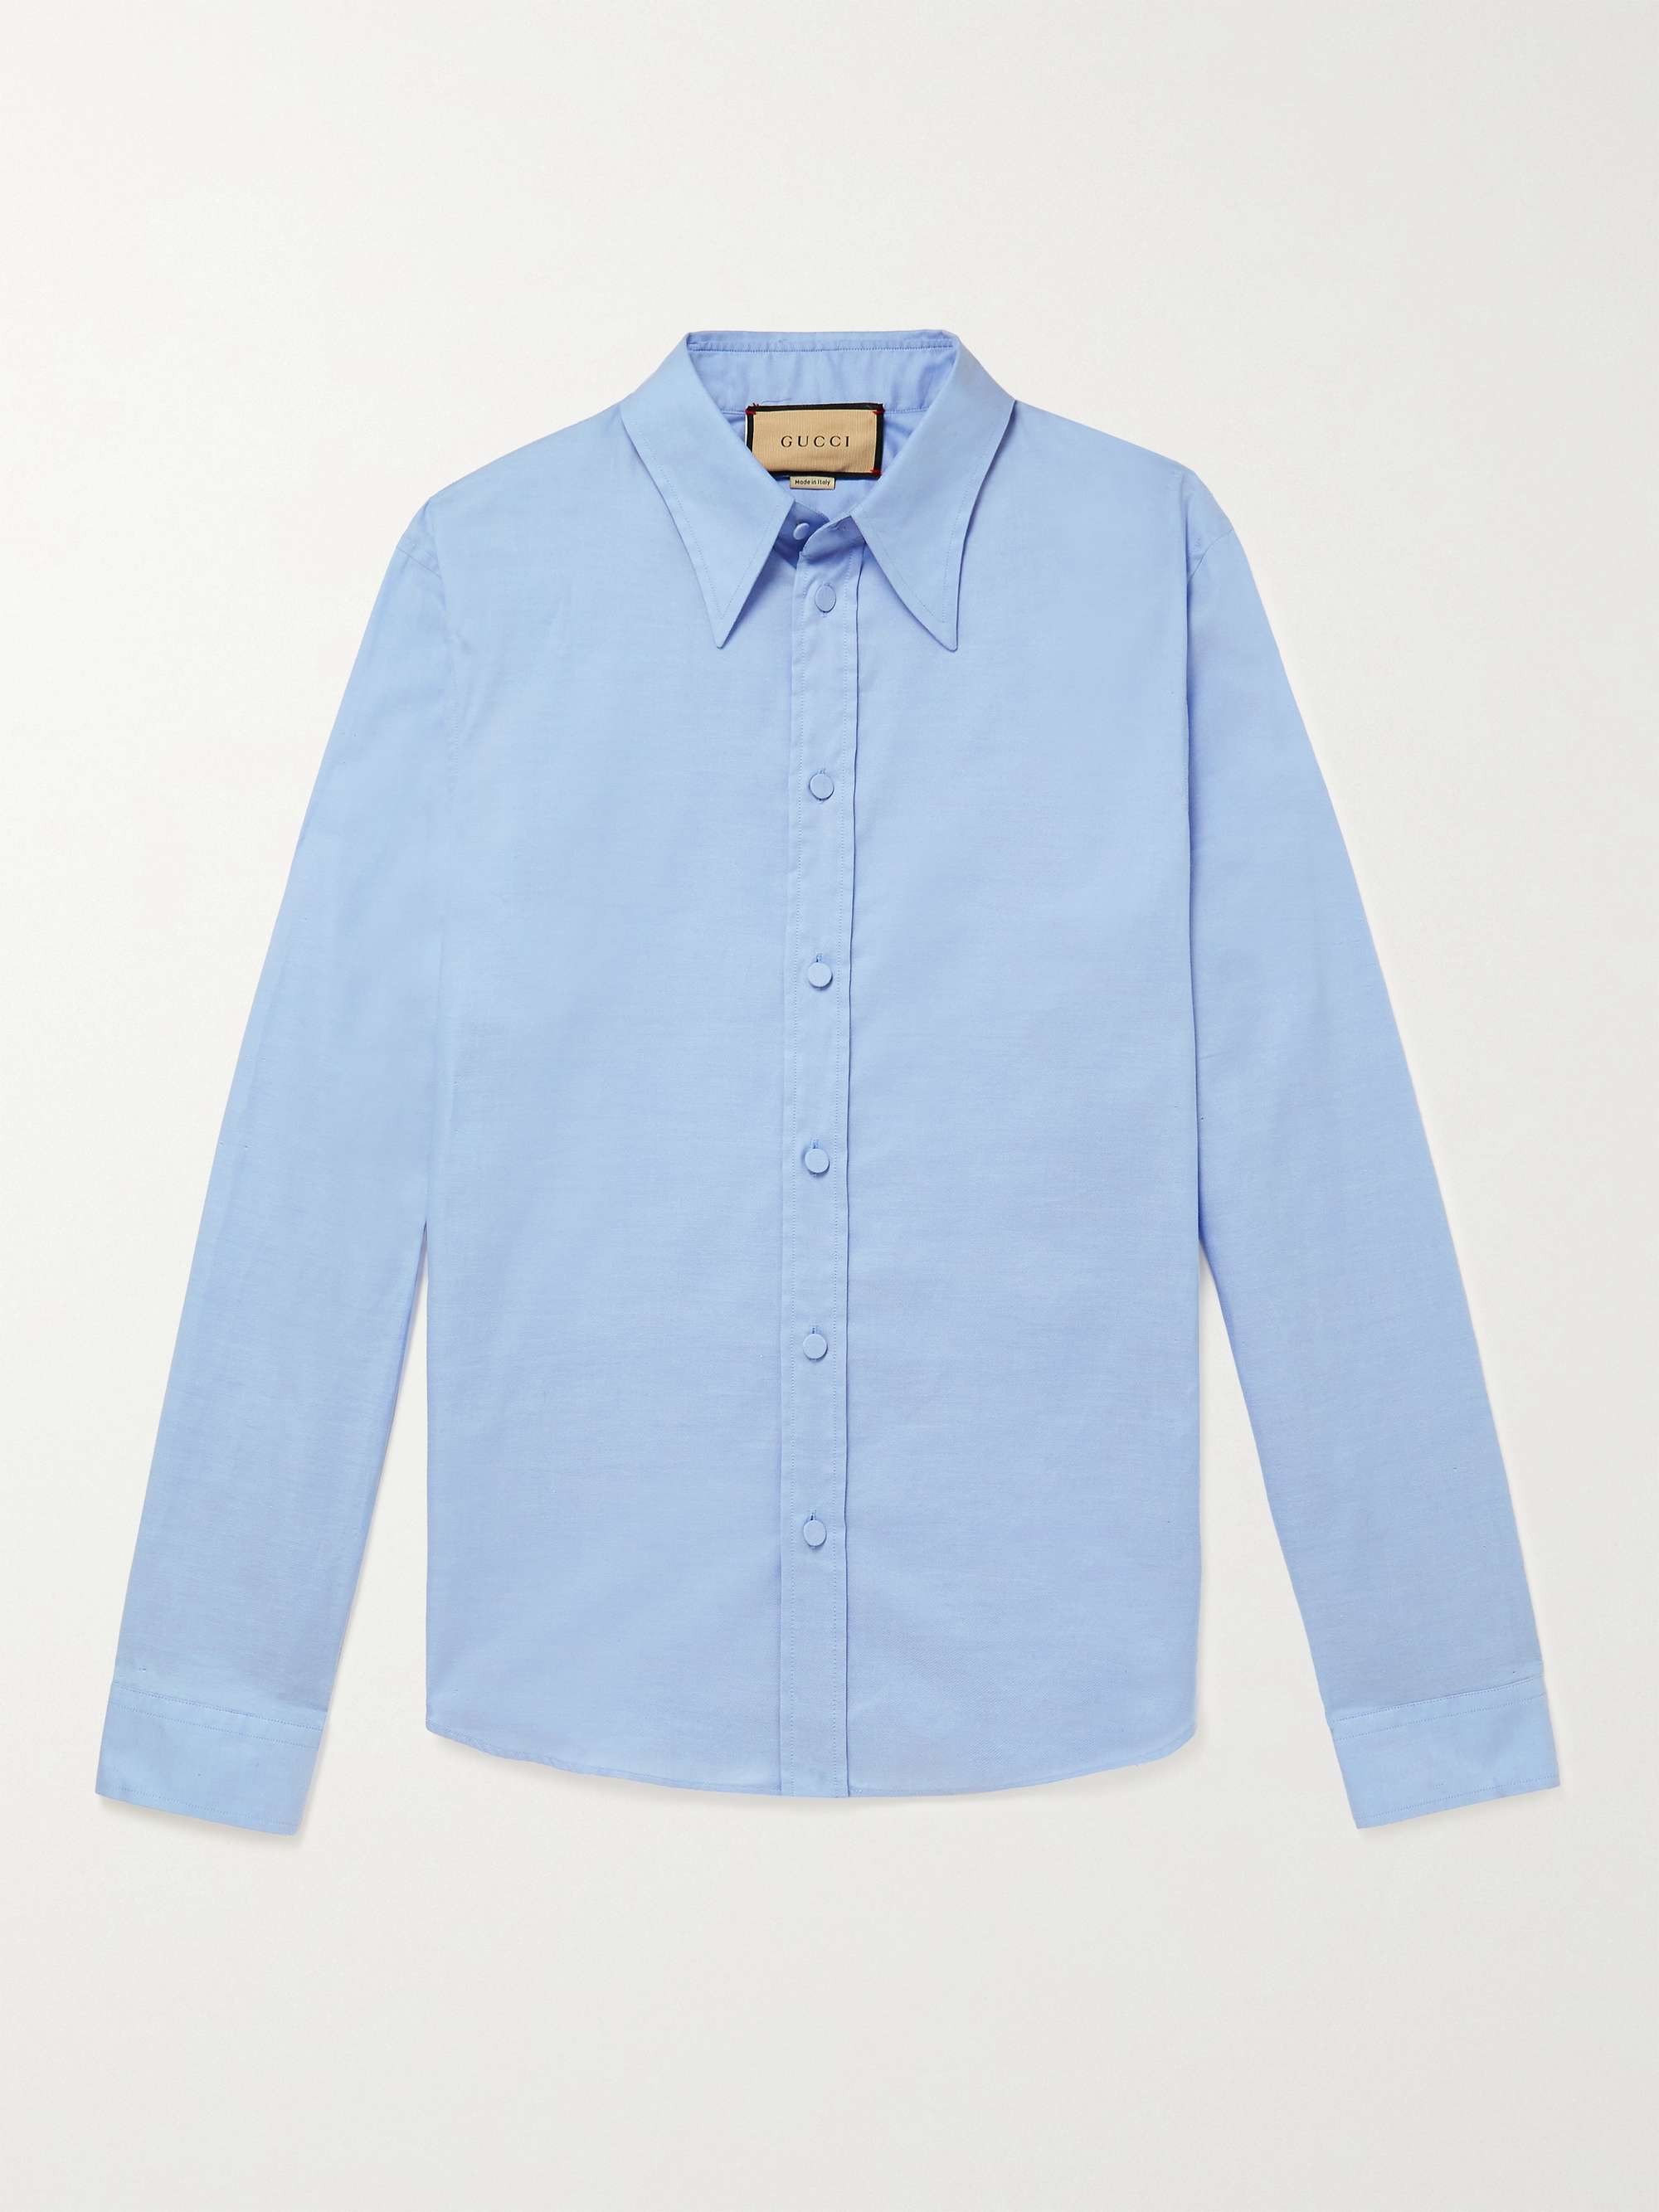 Blue Gainsburg Cotton-Poplin Shirt | GUCCI | MR PORTER